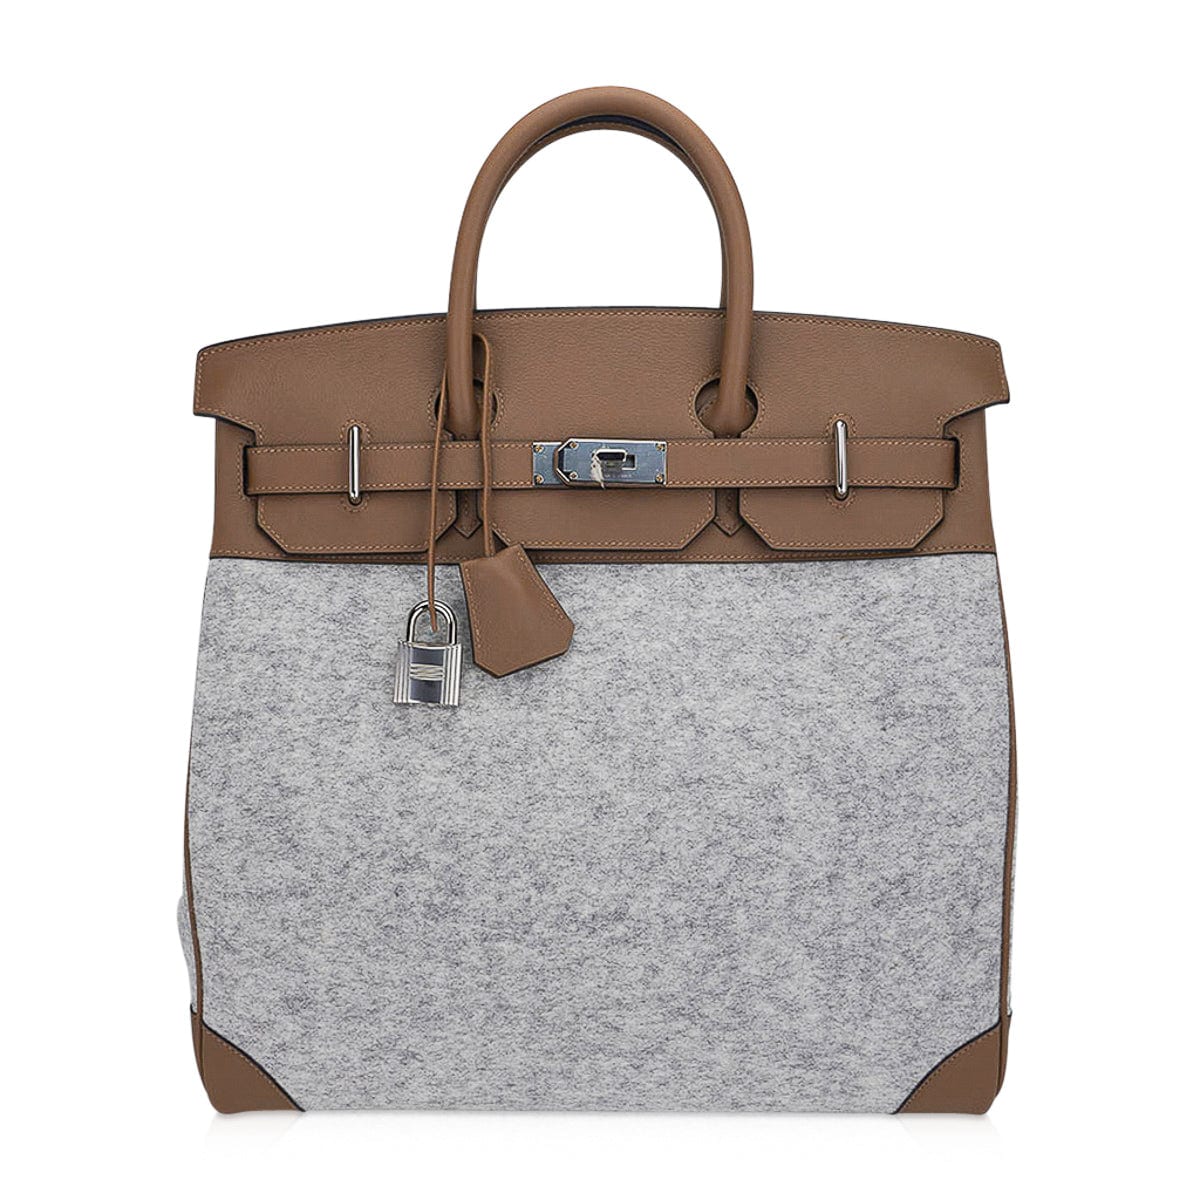 Designer Herms Handbags Birkin 50cm Totes Bags 50cm HAC Bag Large Travel  Bag Large Capacity Bag Leather Travel Bag Domineering Mens Bag HB6X From  Qsc145, $373.06